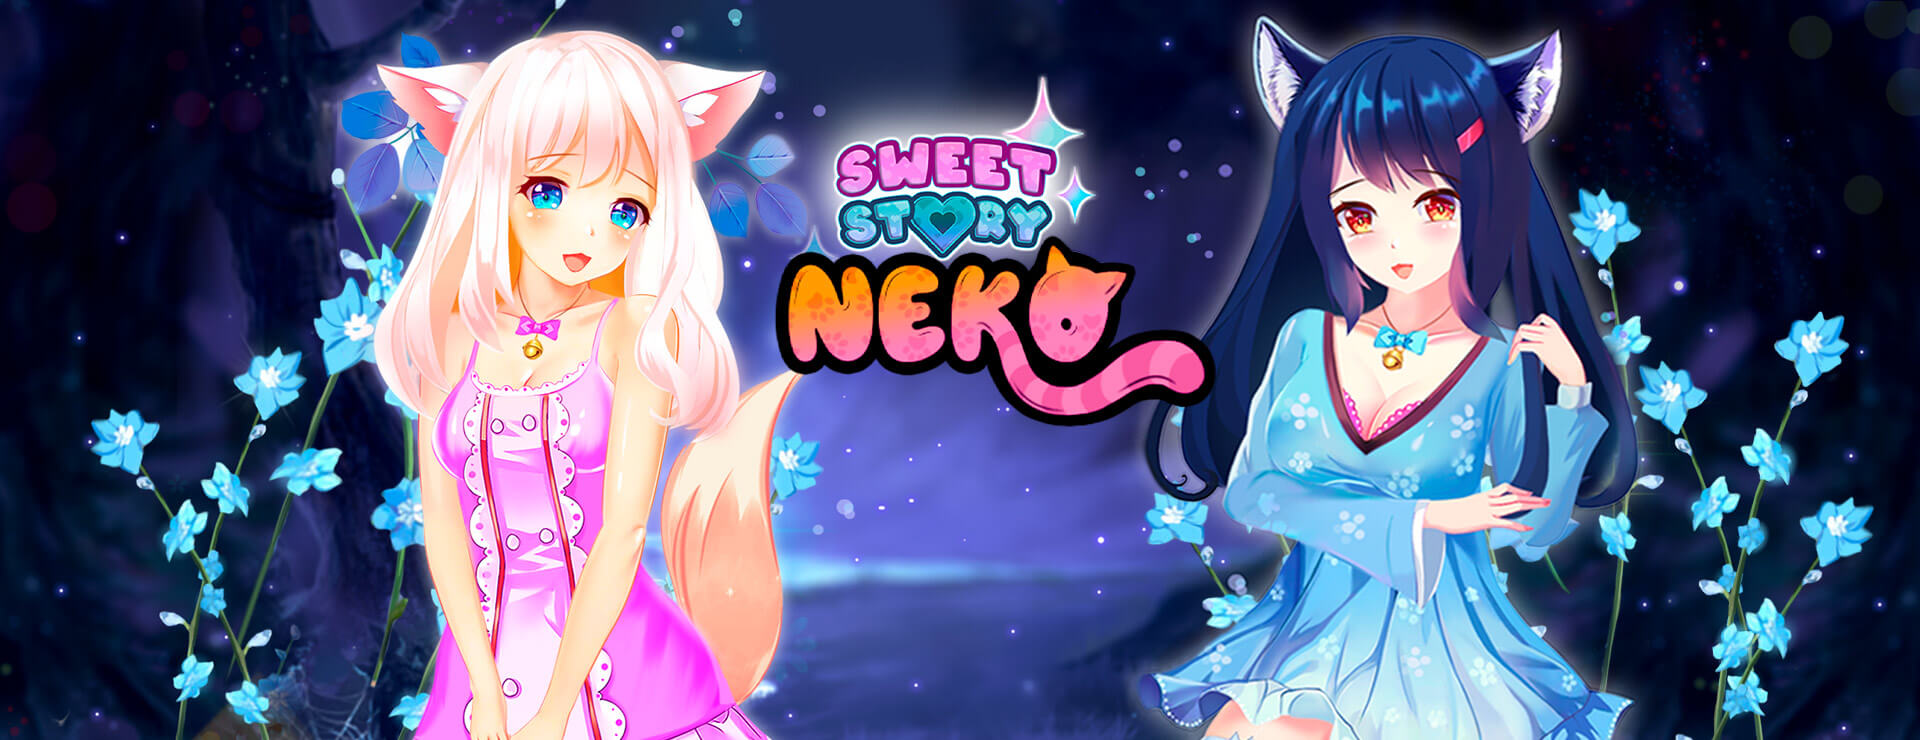 Sweet Story Neko - Casual Juego